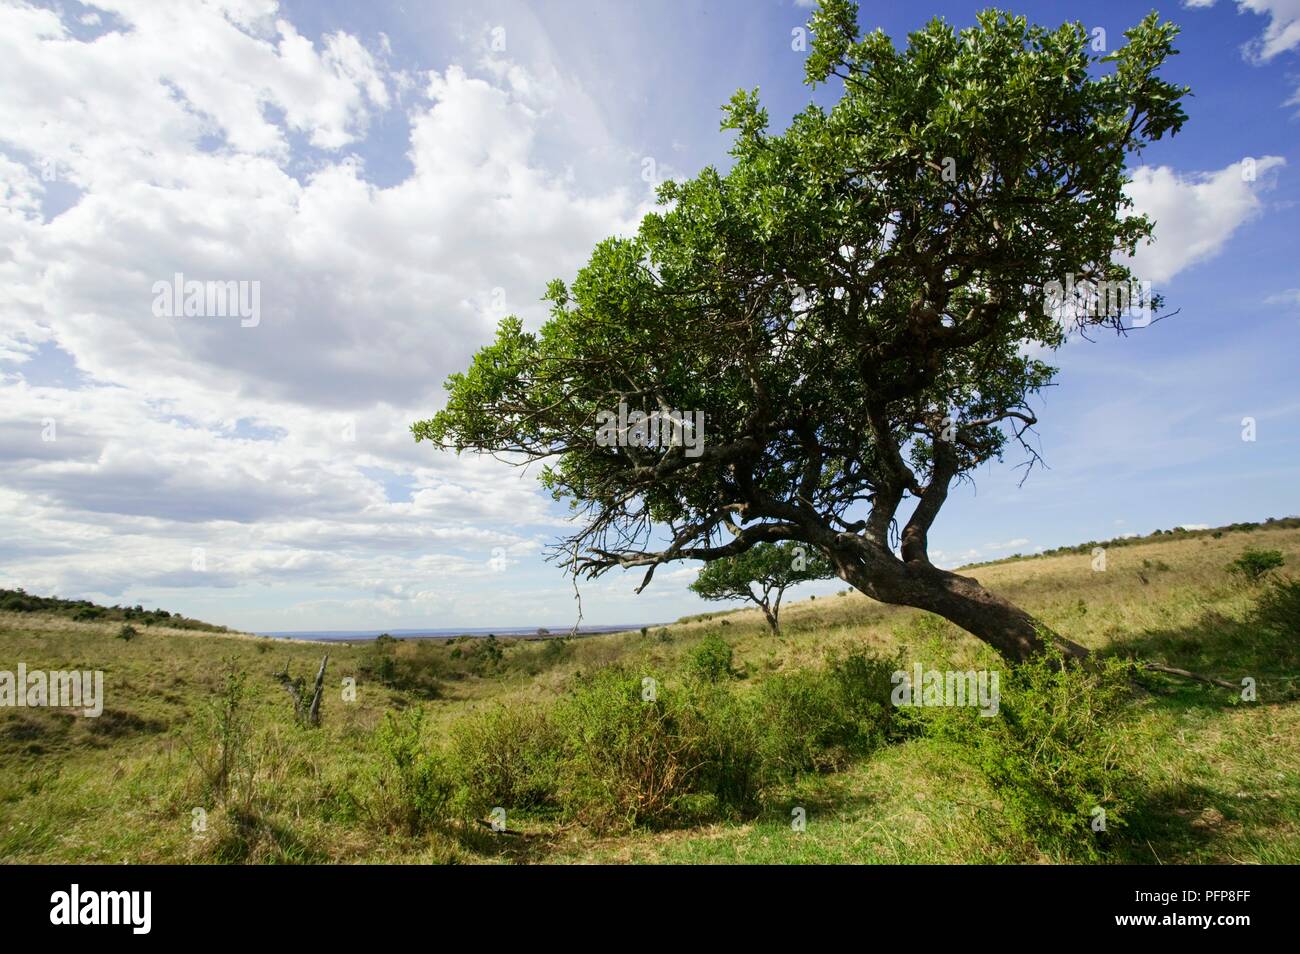 Kenya, Masai Mara National Reserve, bent tree in grass landscape Stock Photo